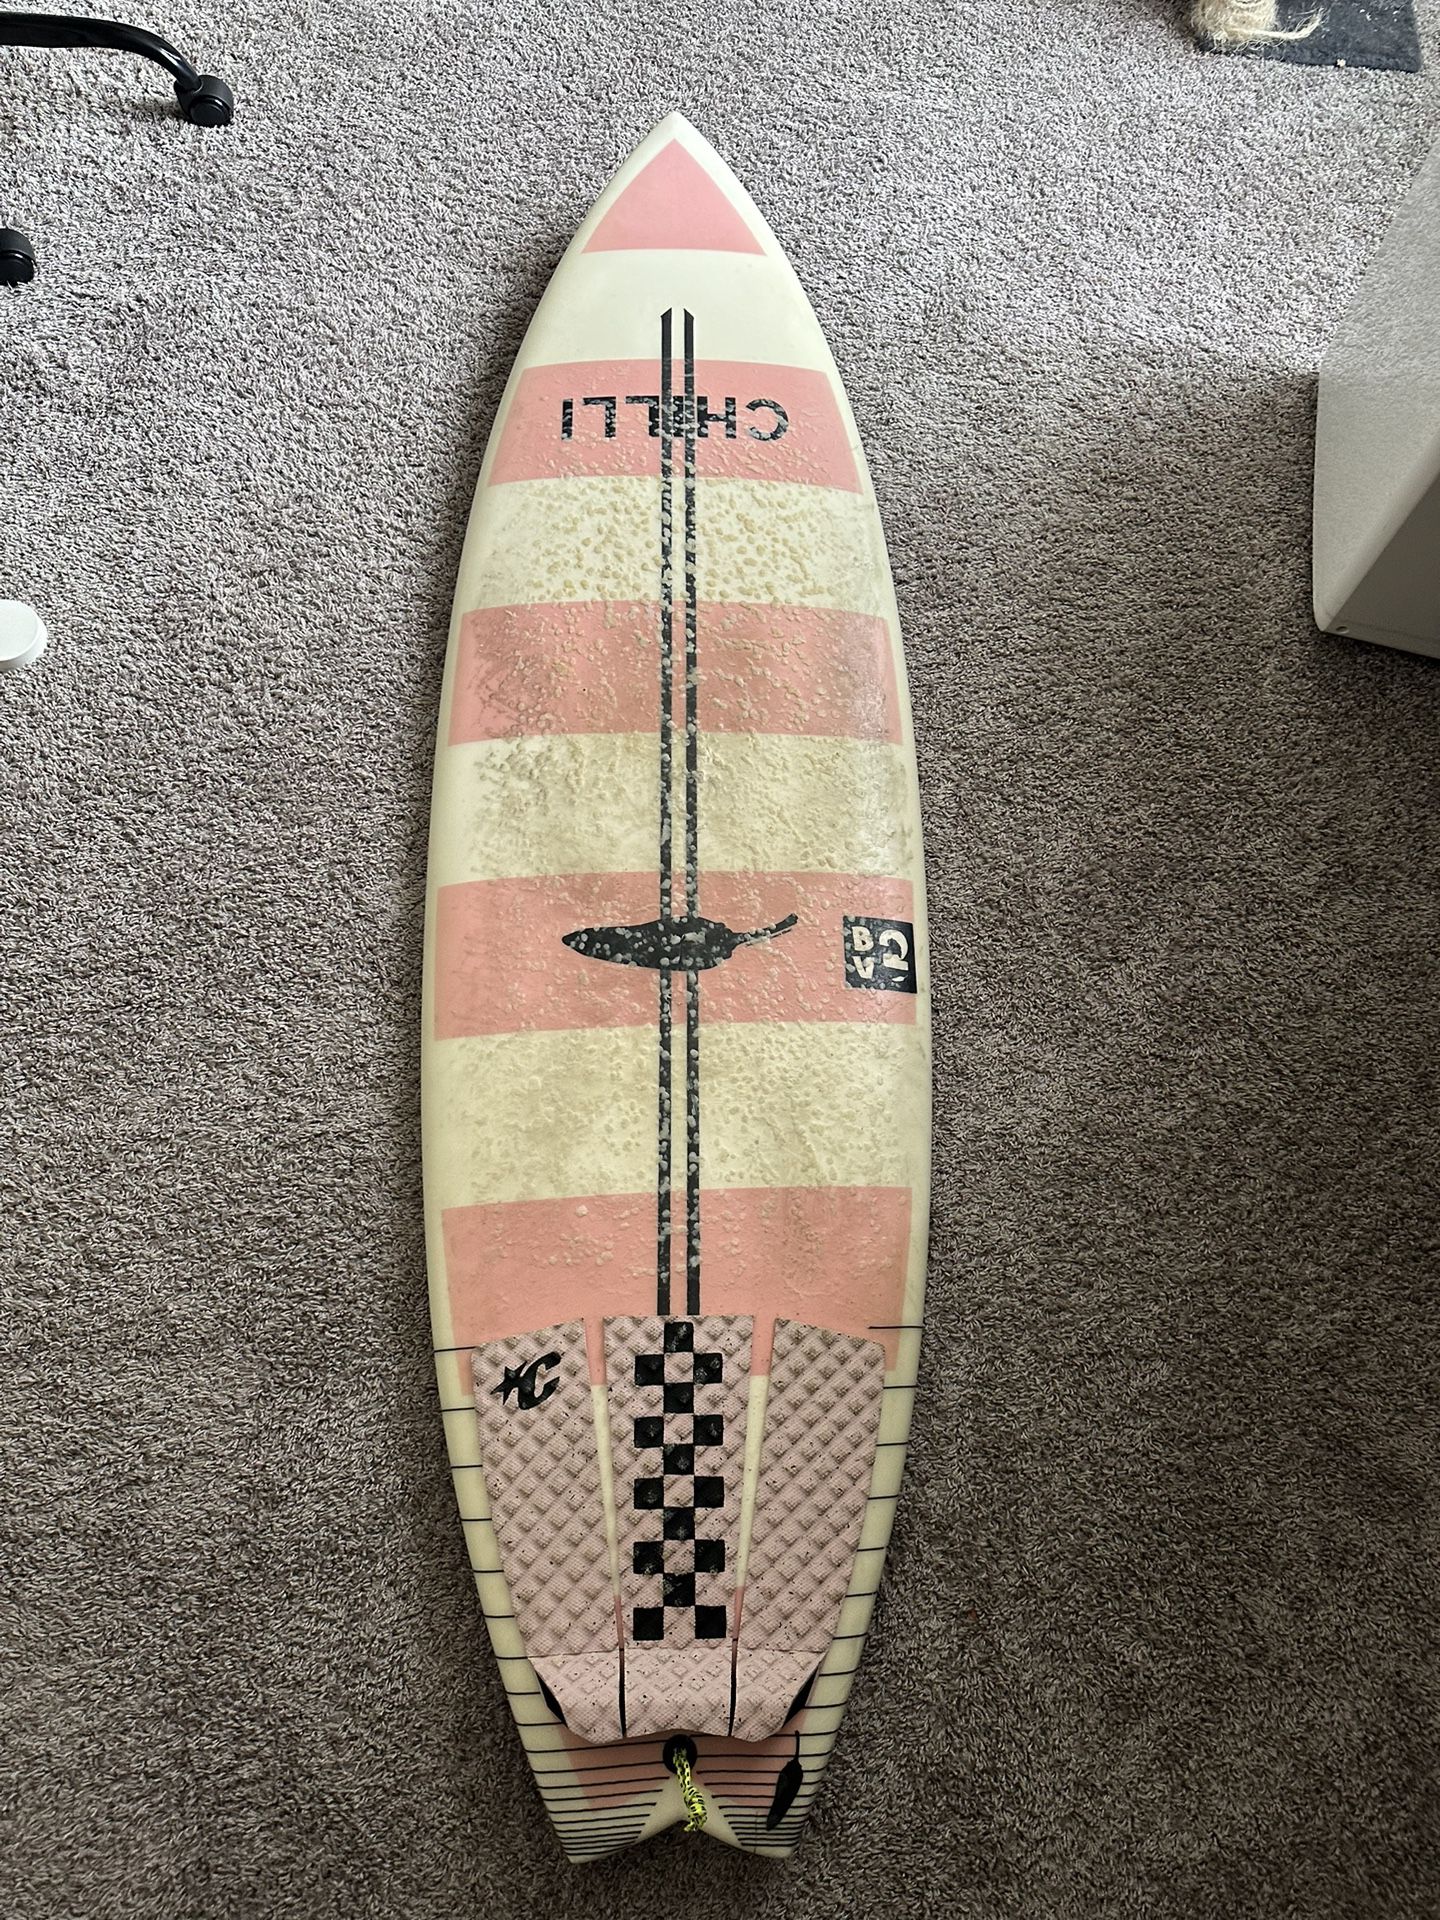 Chilli Surfboards BV2 5’11